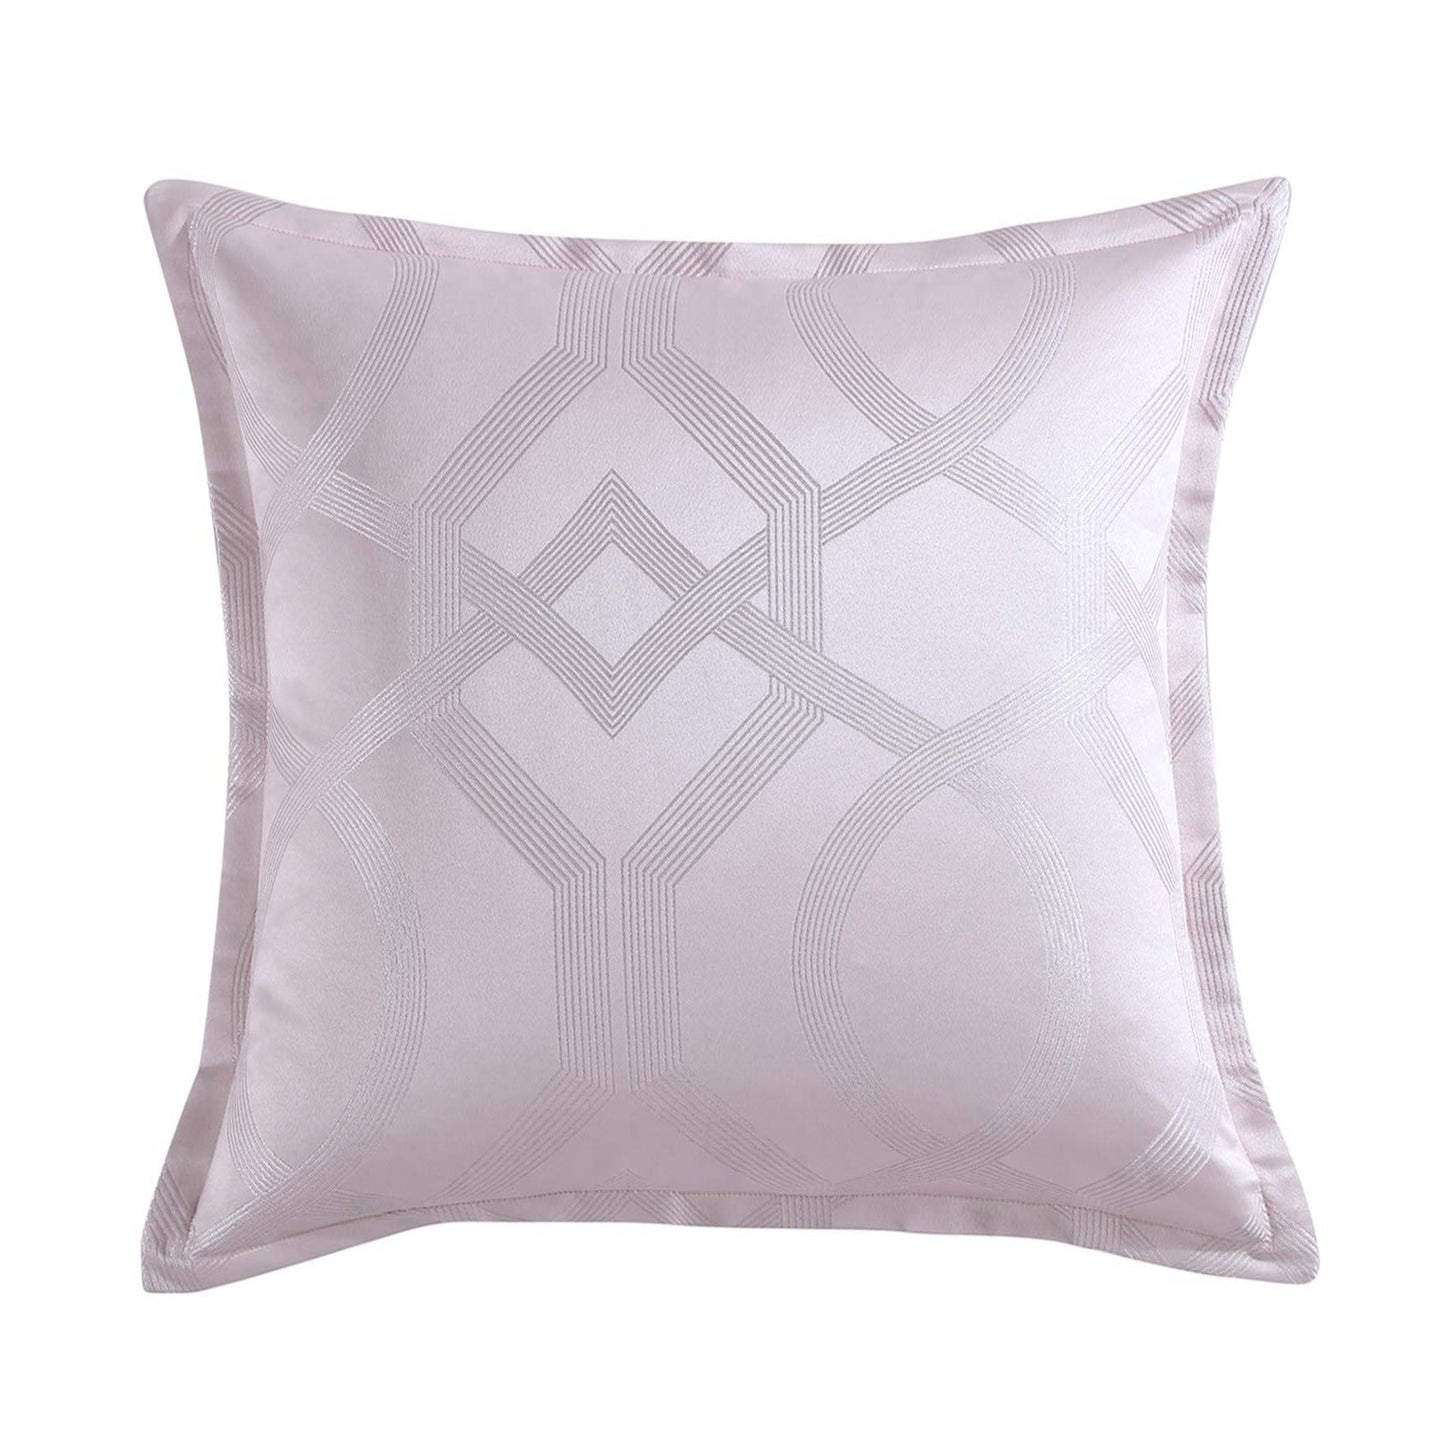 Seville Blush European Pillowcase by Logan and Mason Platinum